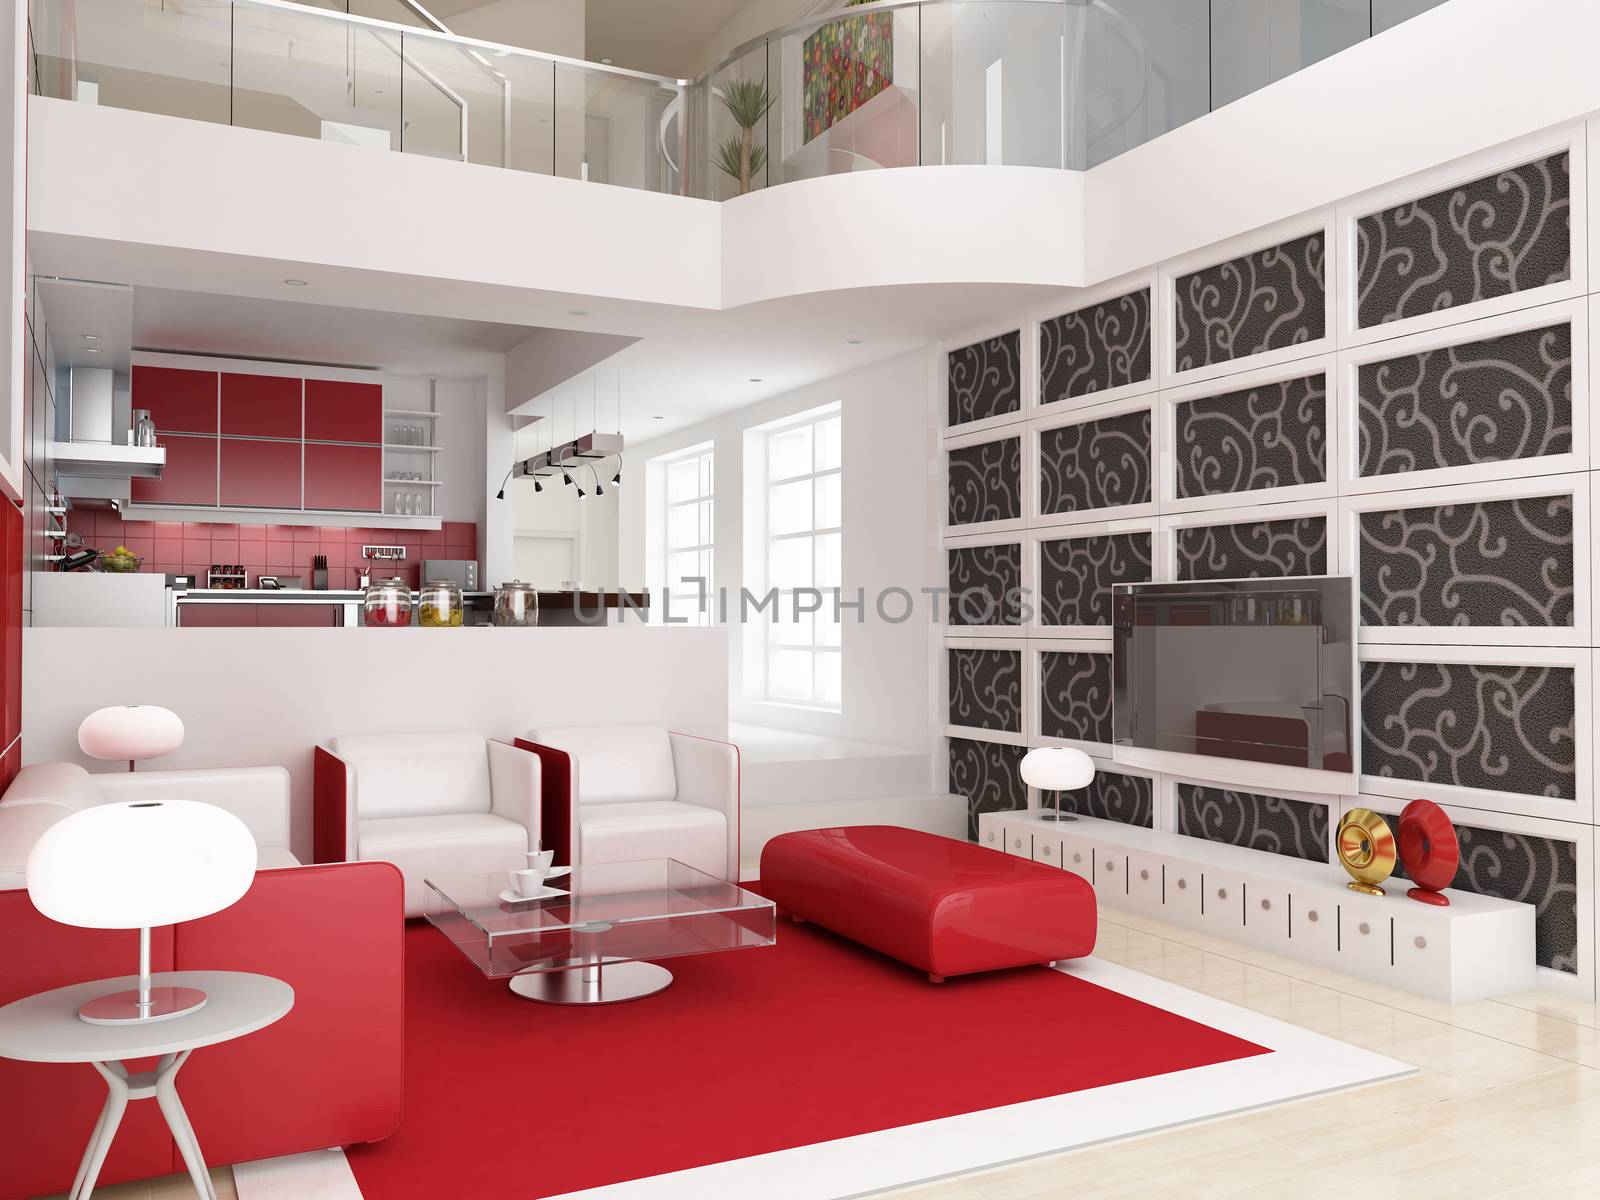 Modern interior (3D Render) - Living Room